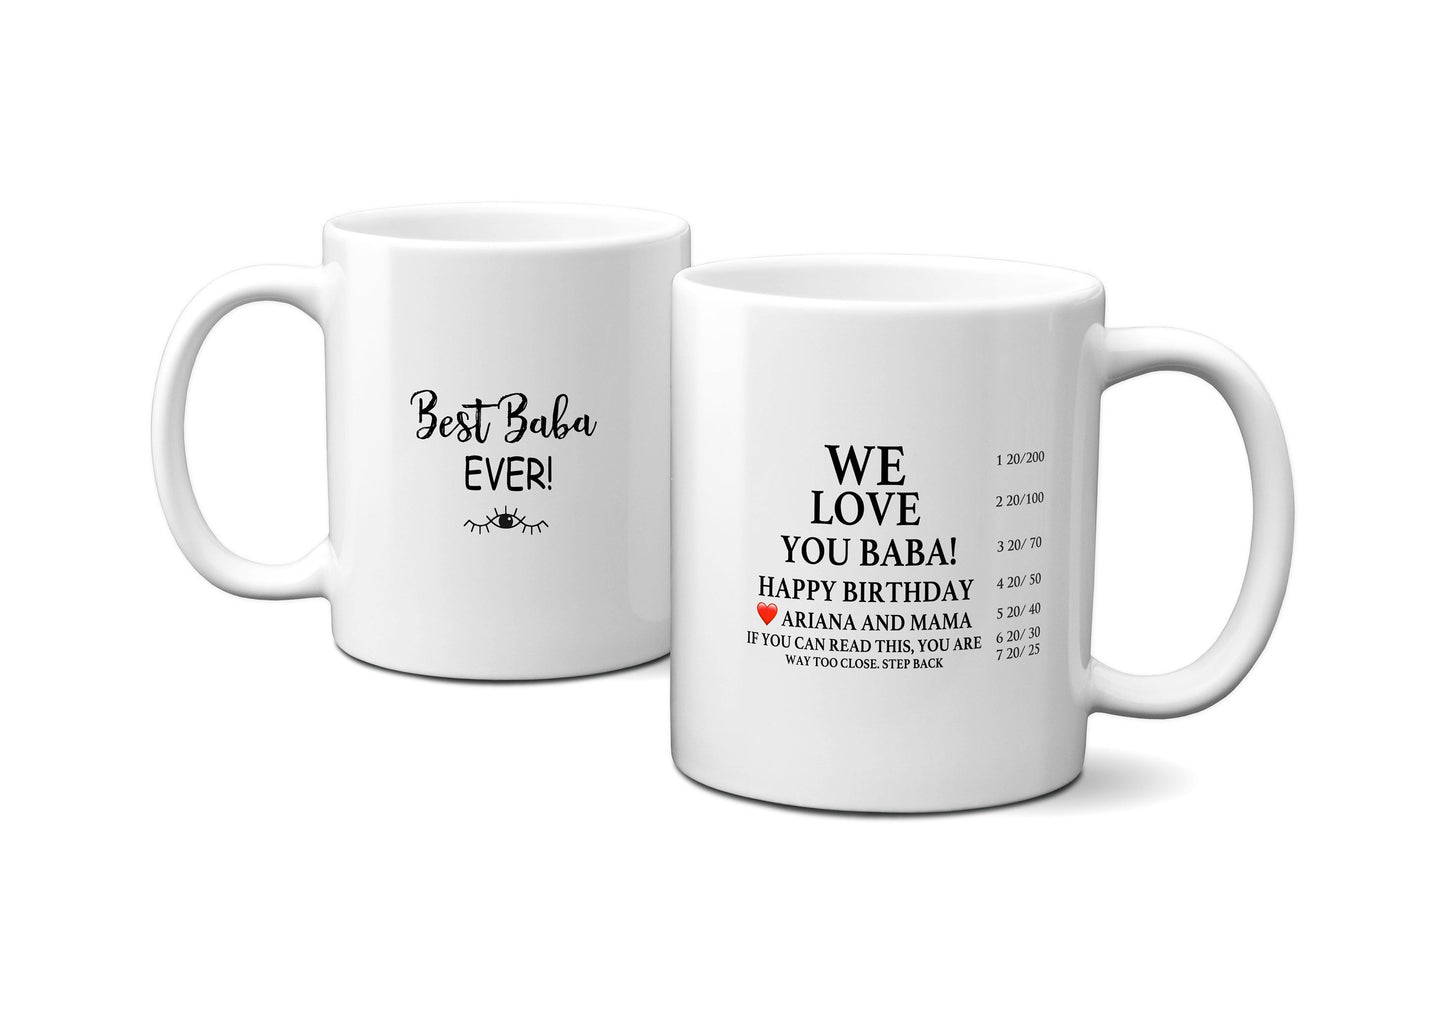 Meh Coffee Mug Gift for Friend, Funny Coffee Mugs with Saying, Statement Mug